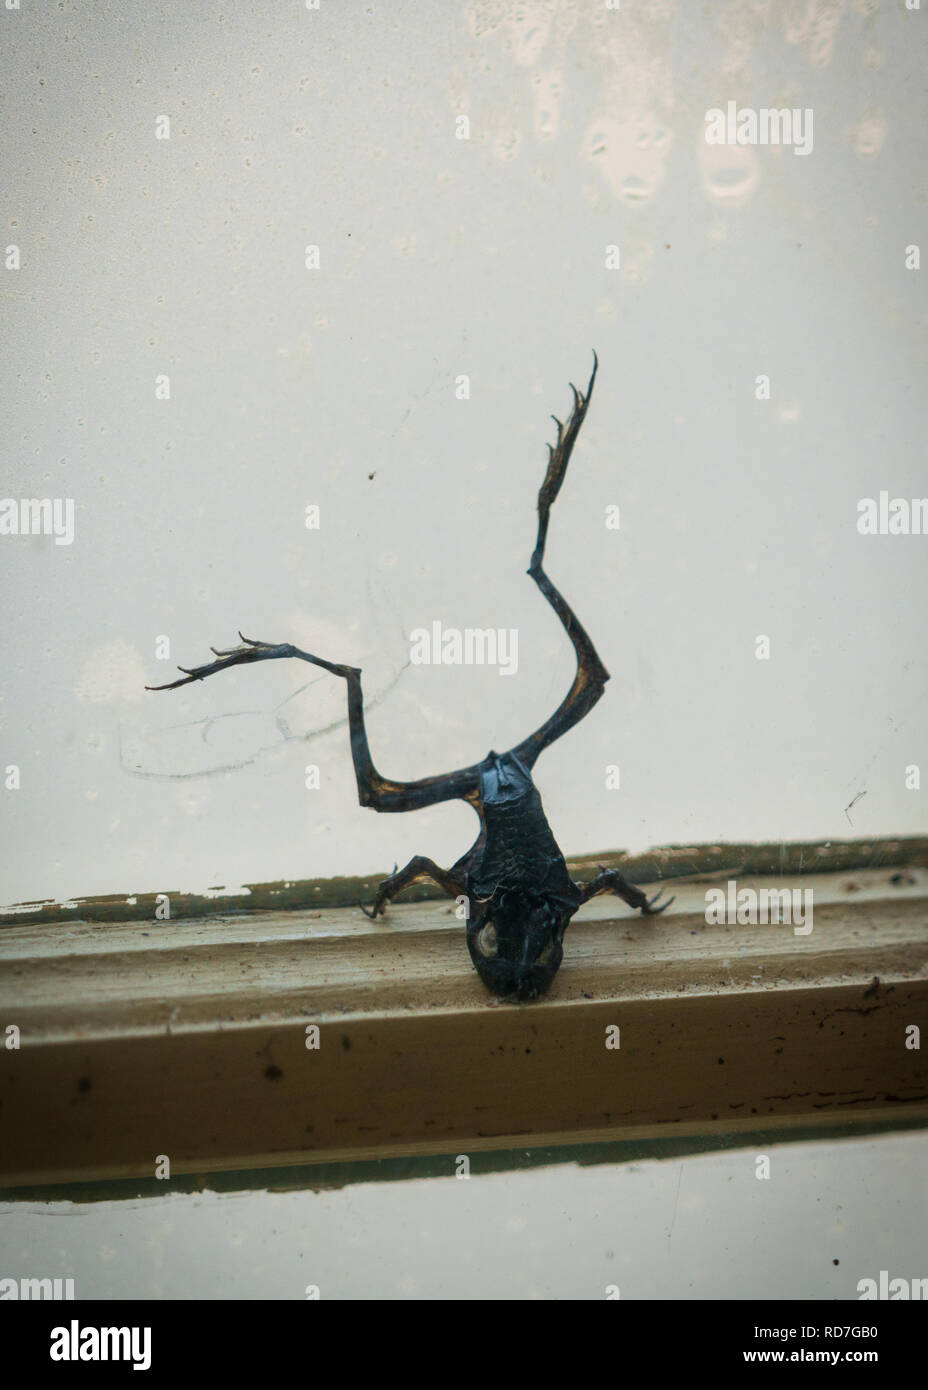 A dead mommified frog stuck in a window. Stock Photo